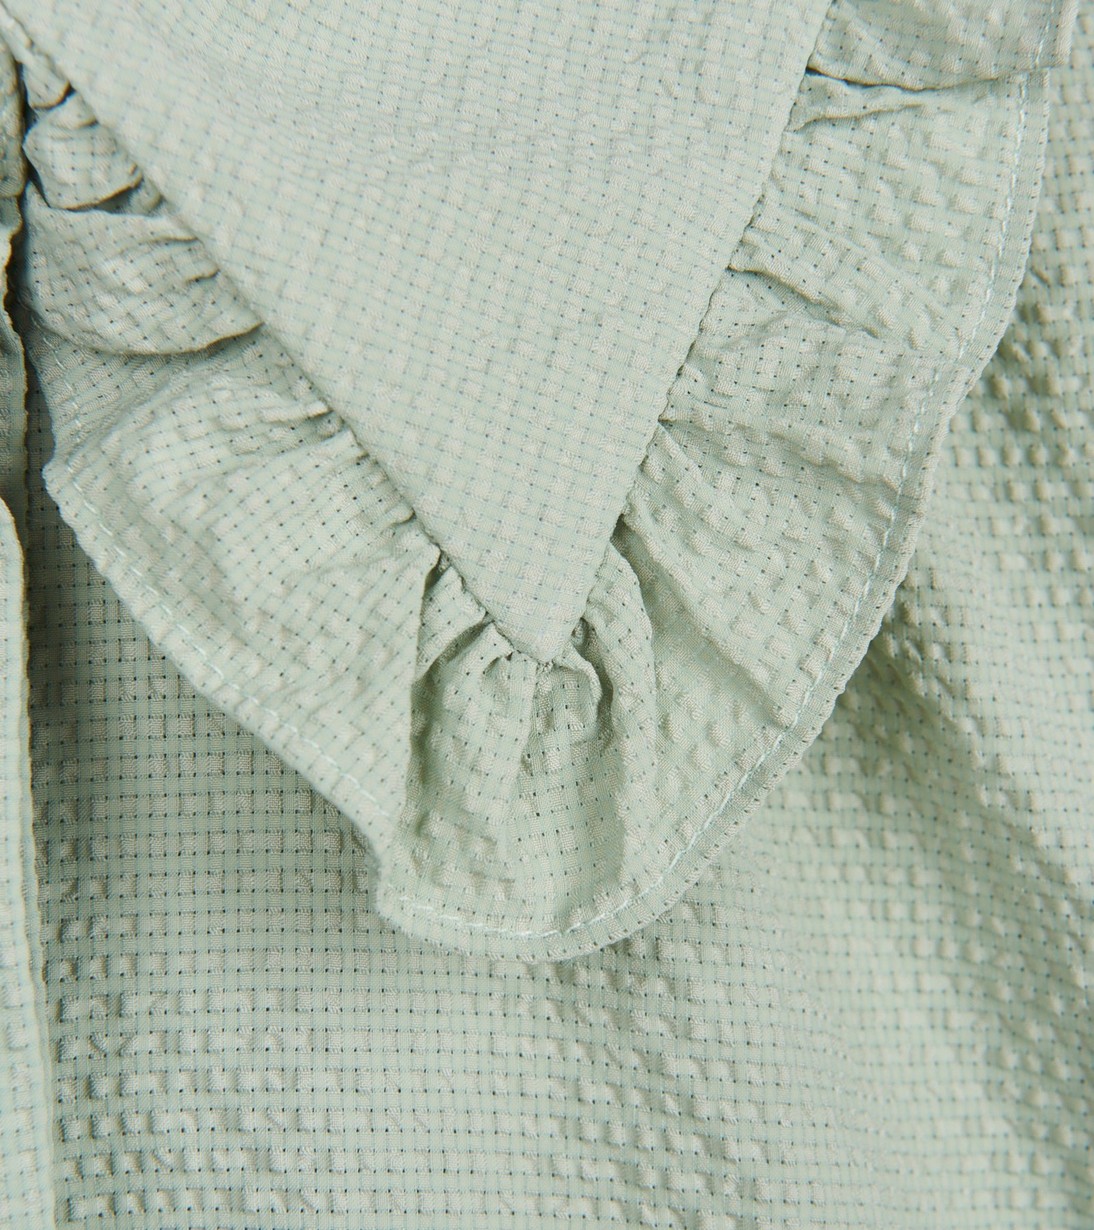 CKS Dames - ROSALINA - blouse korte mouwen - lichtgroen